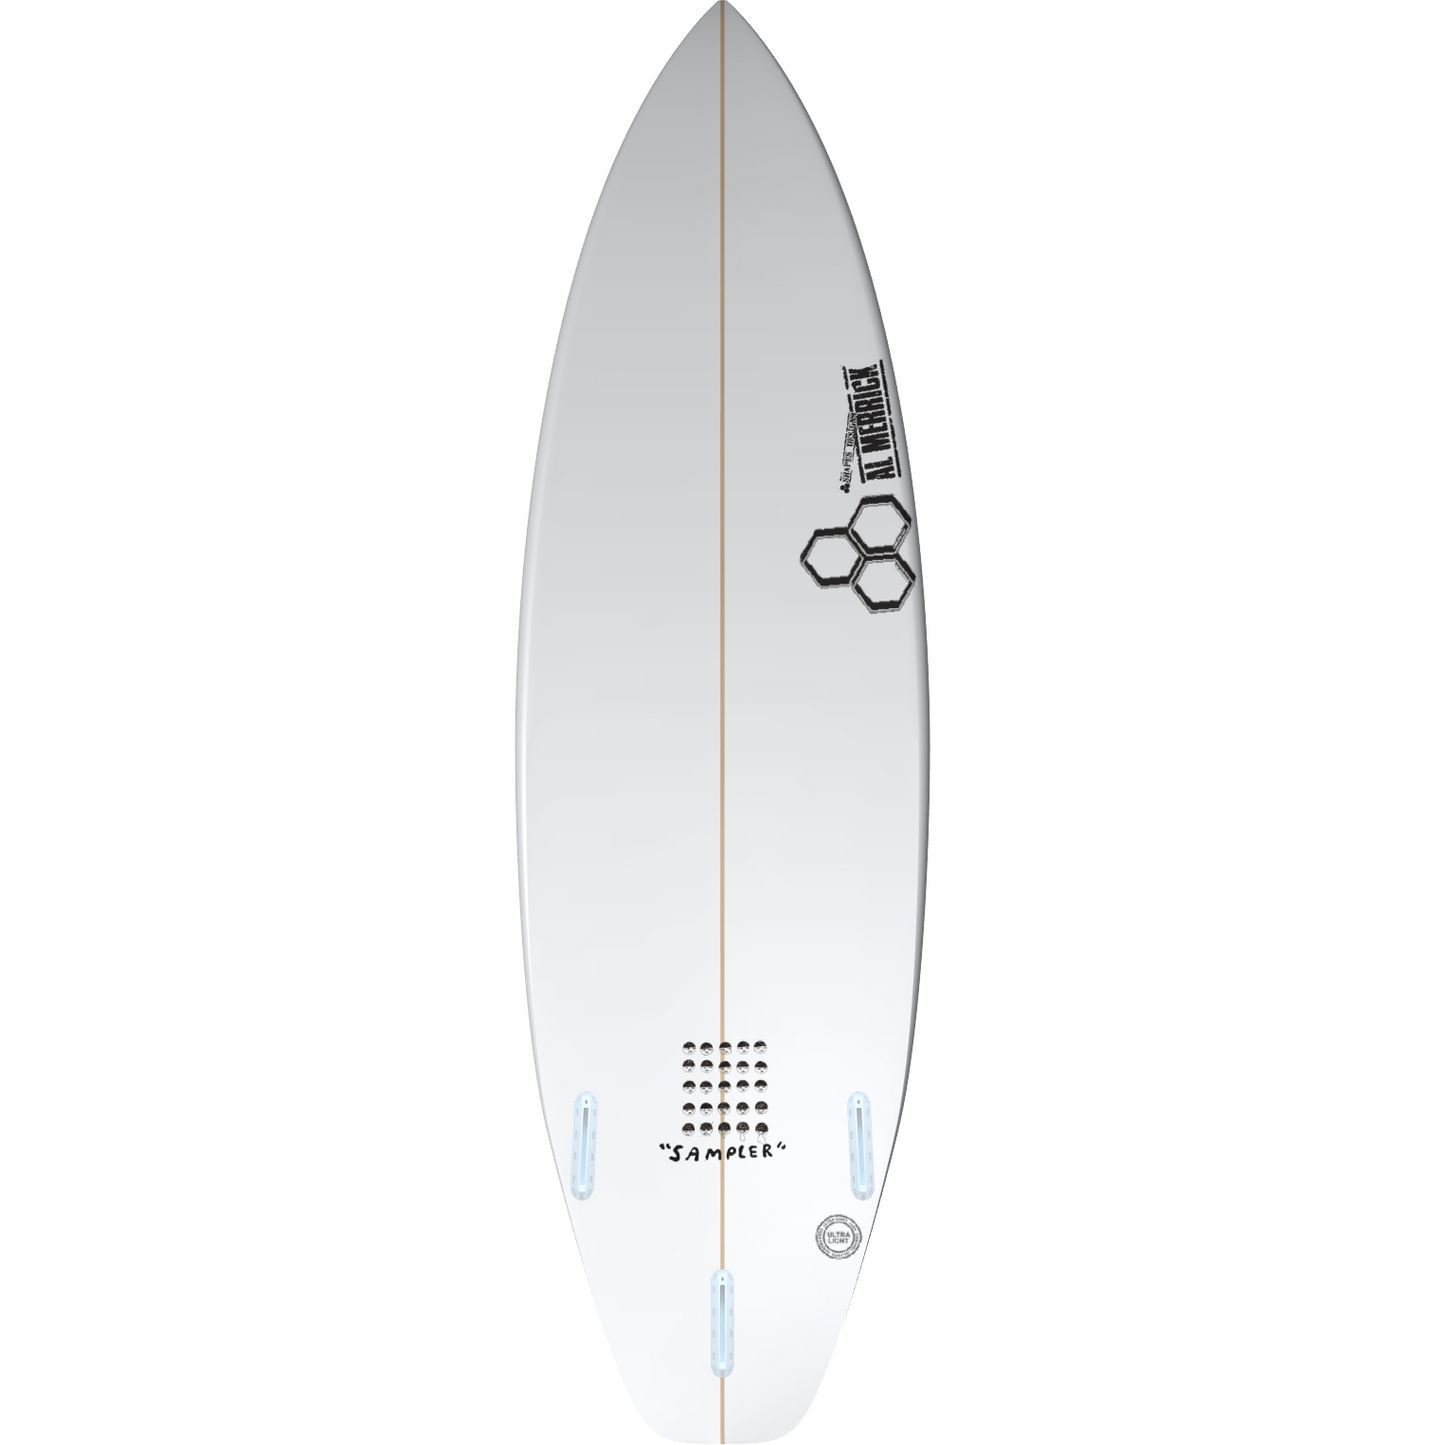 Channel Islands - Sampler Surfboard